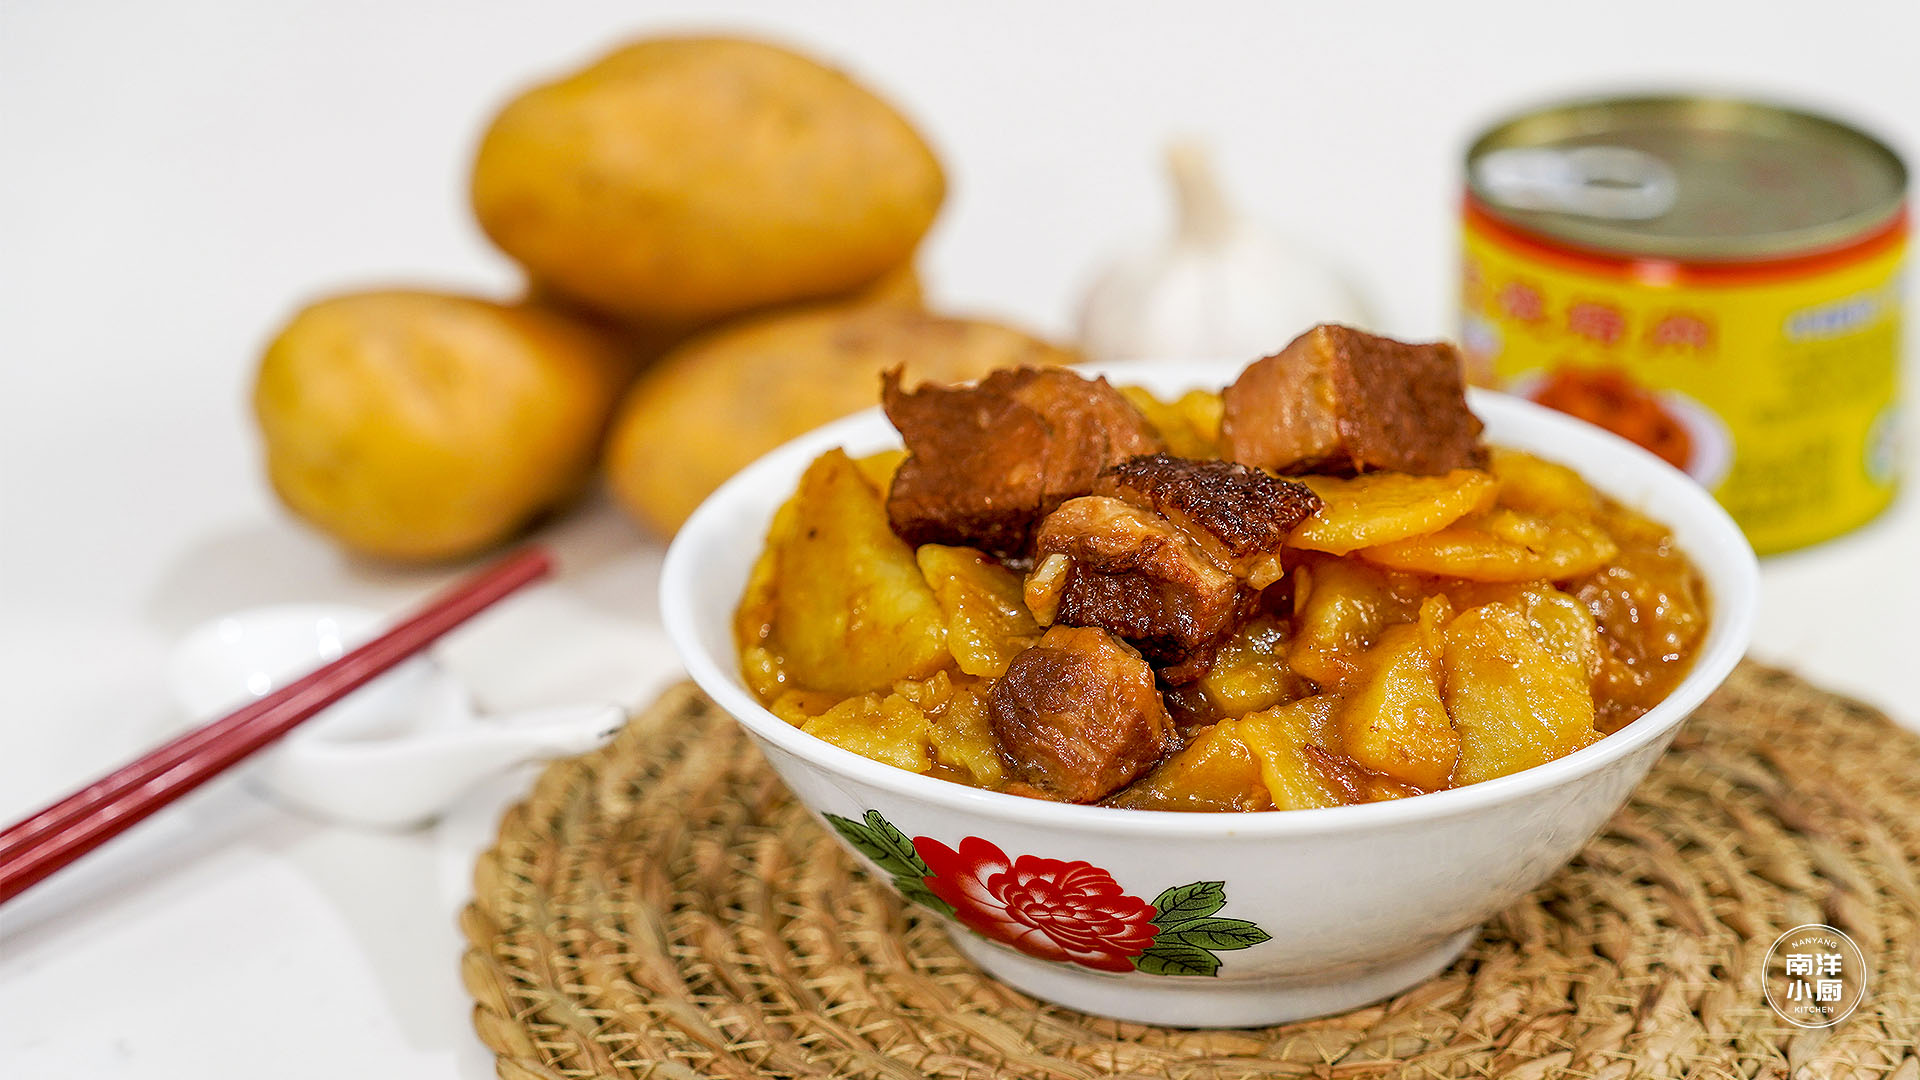 罐头红烧猪肉焖荷兰薯 Canned Stewed Pork with Potato